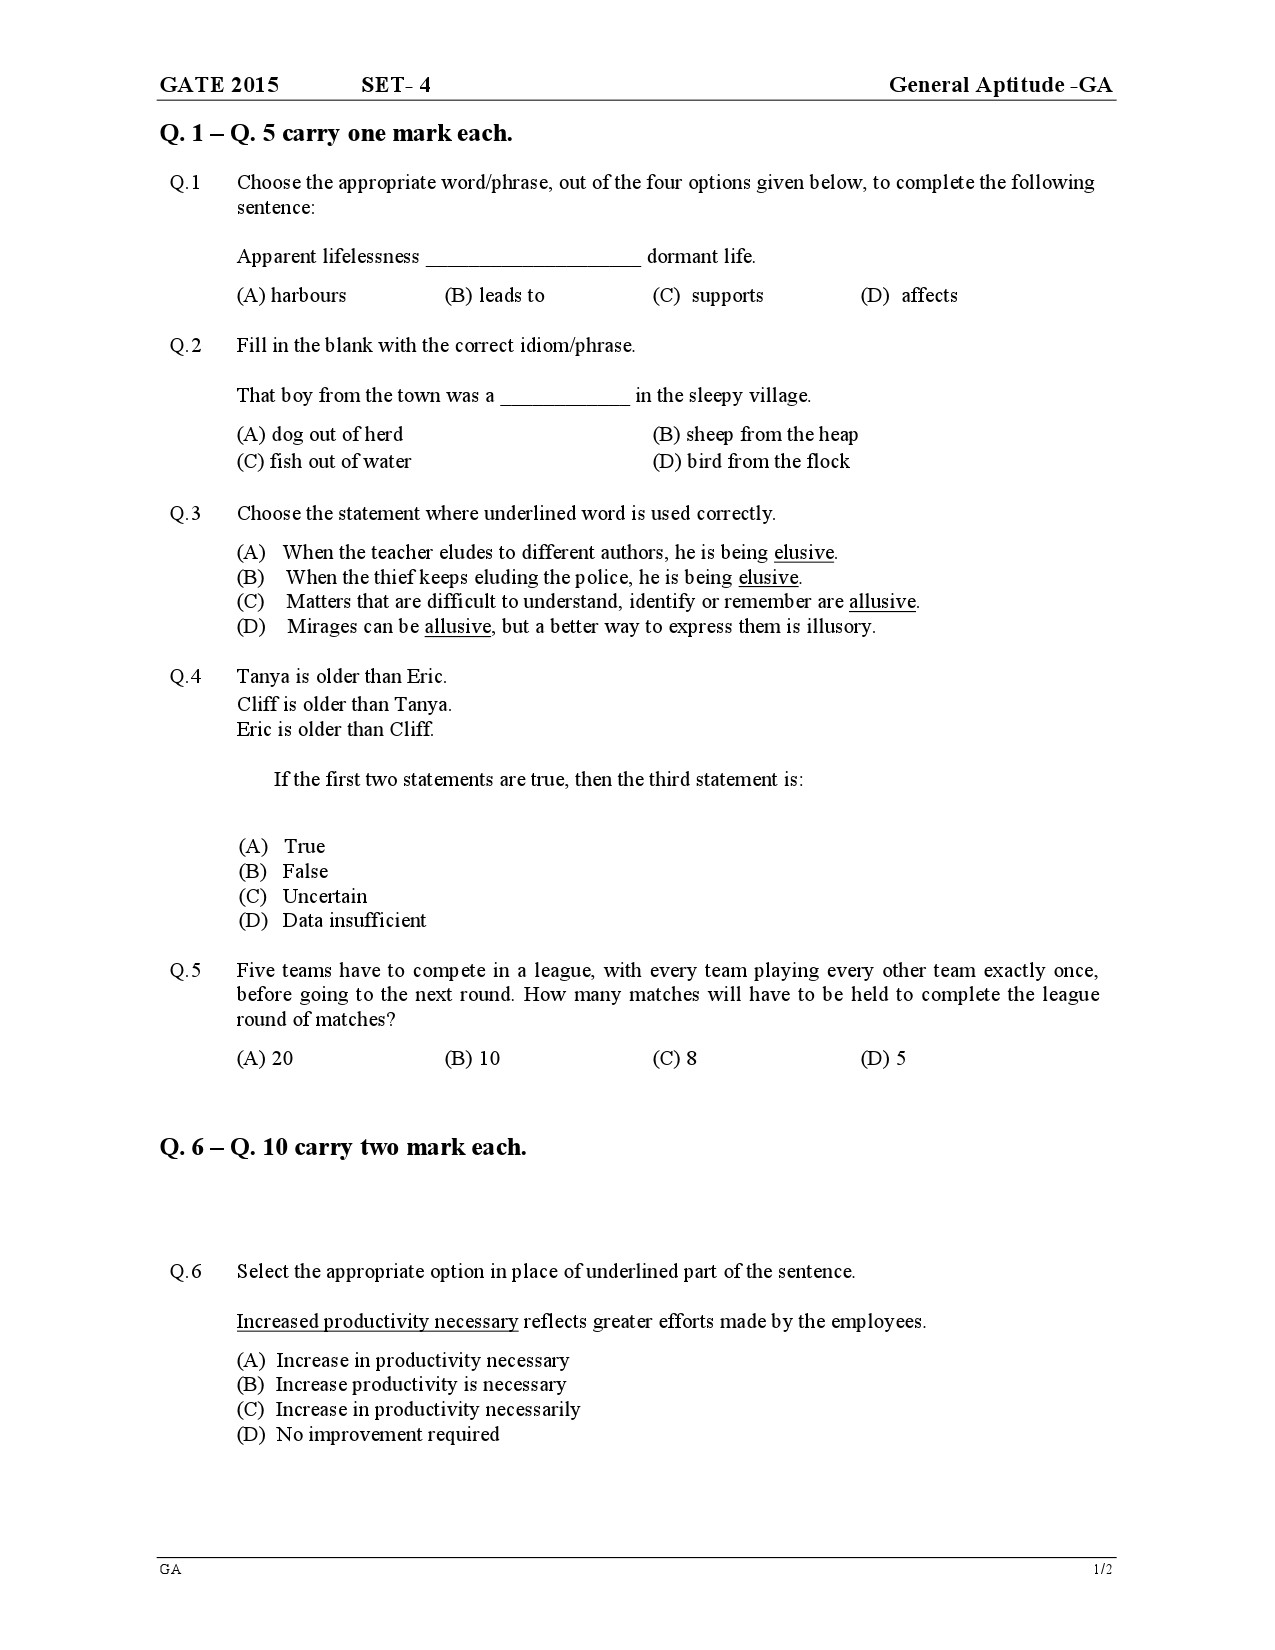 GATE Exam Question Paper 2015 General Aptitude 7